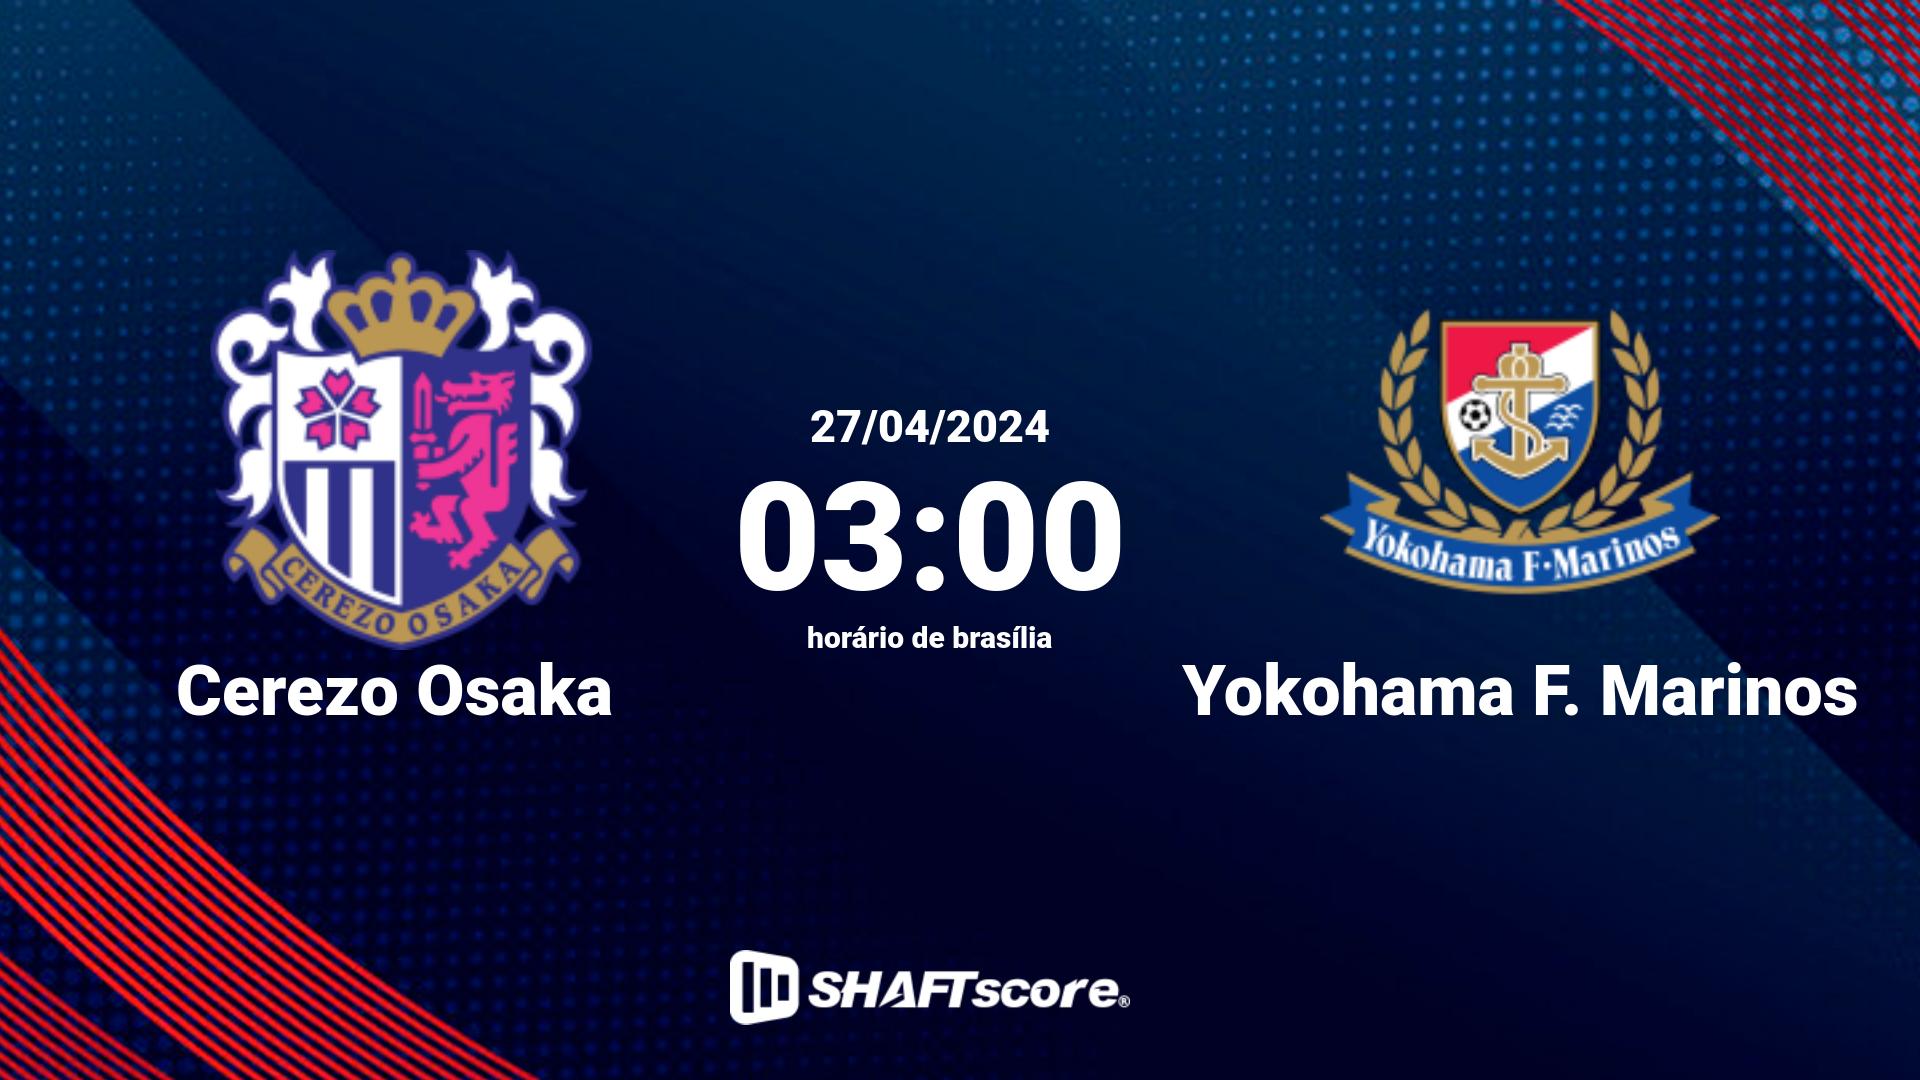 Estatísticas do jogo Cerezo Osaka vs Yokohama F. Marinos 27.04 03:00